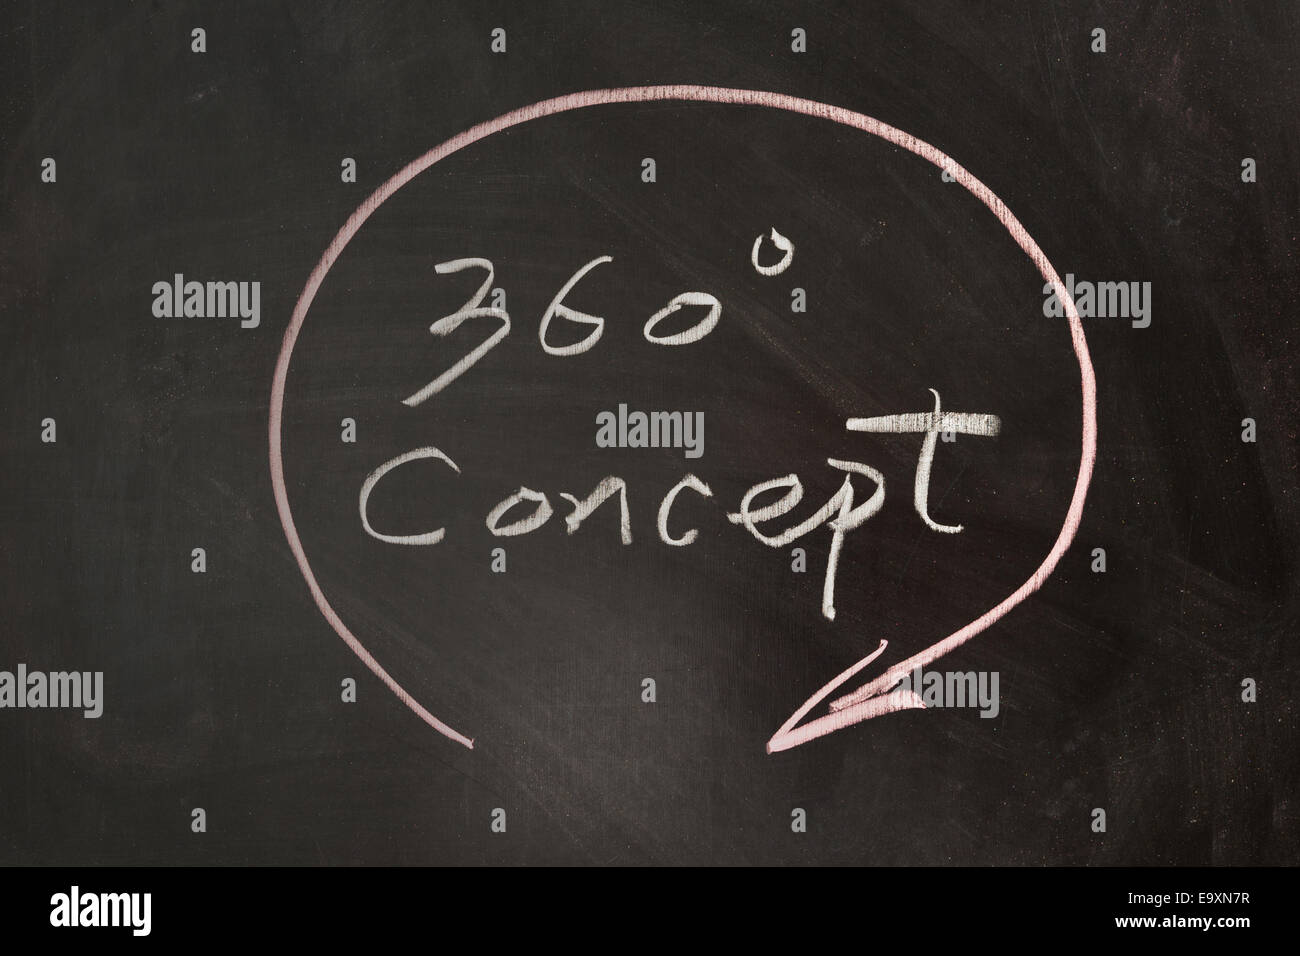 360 degree concept drawn on chalkboard Stock Photo